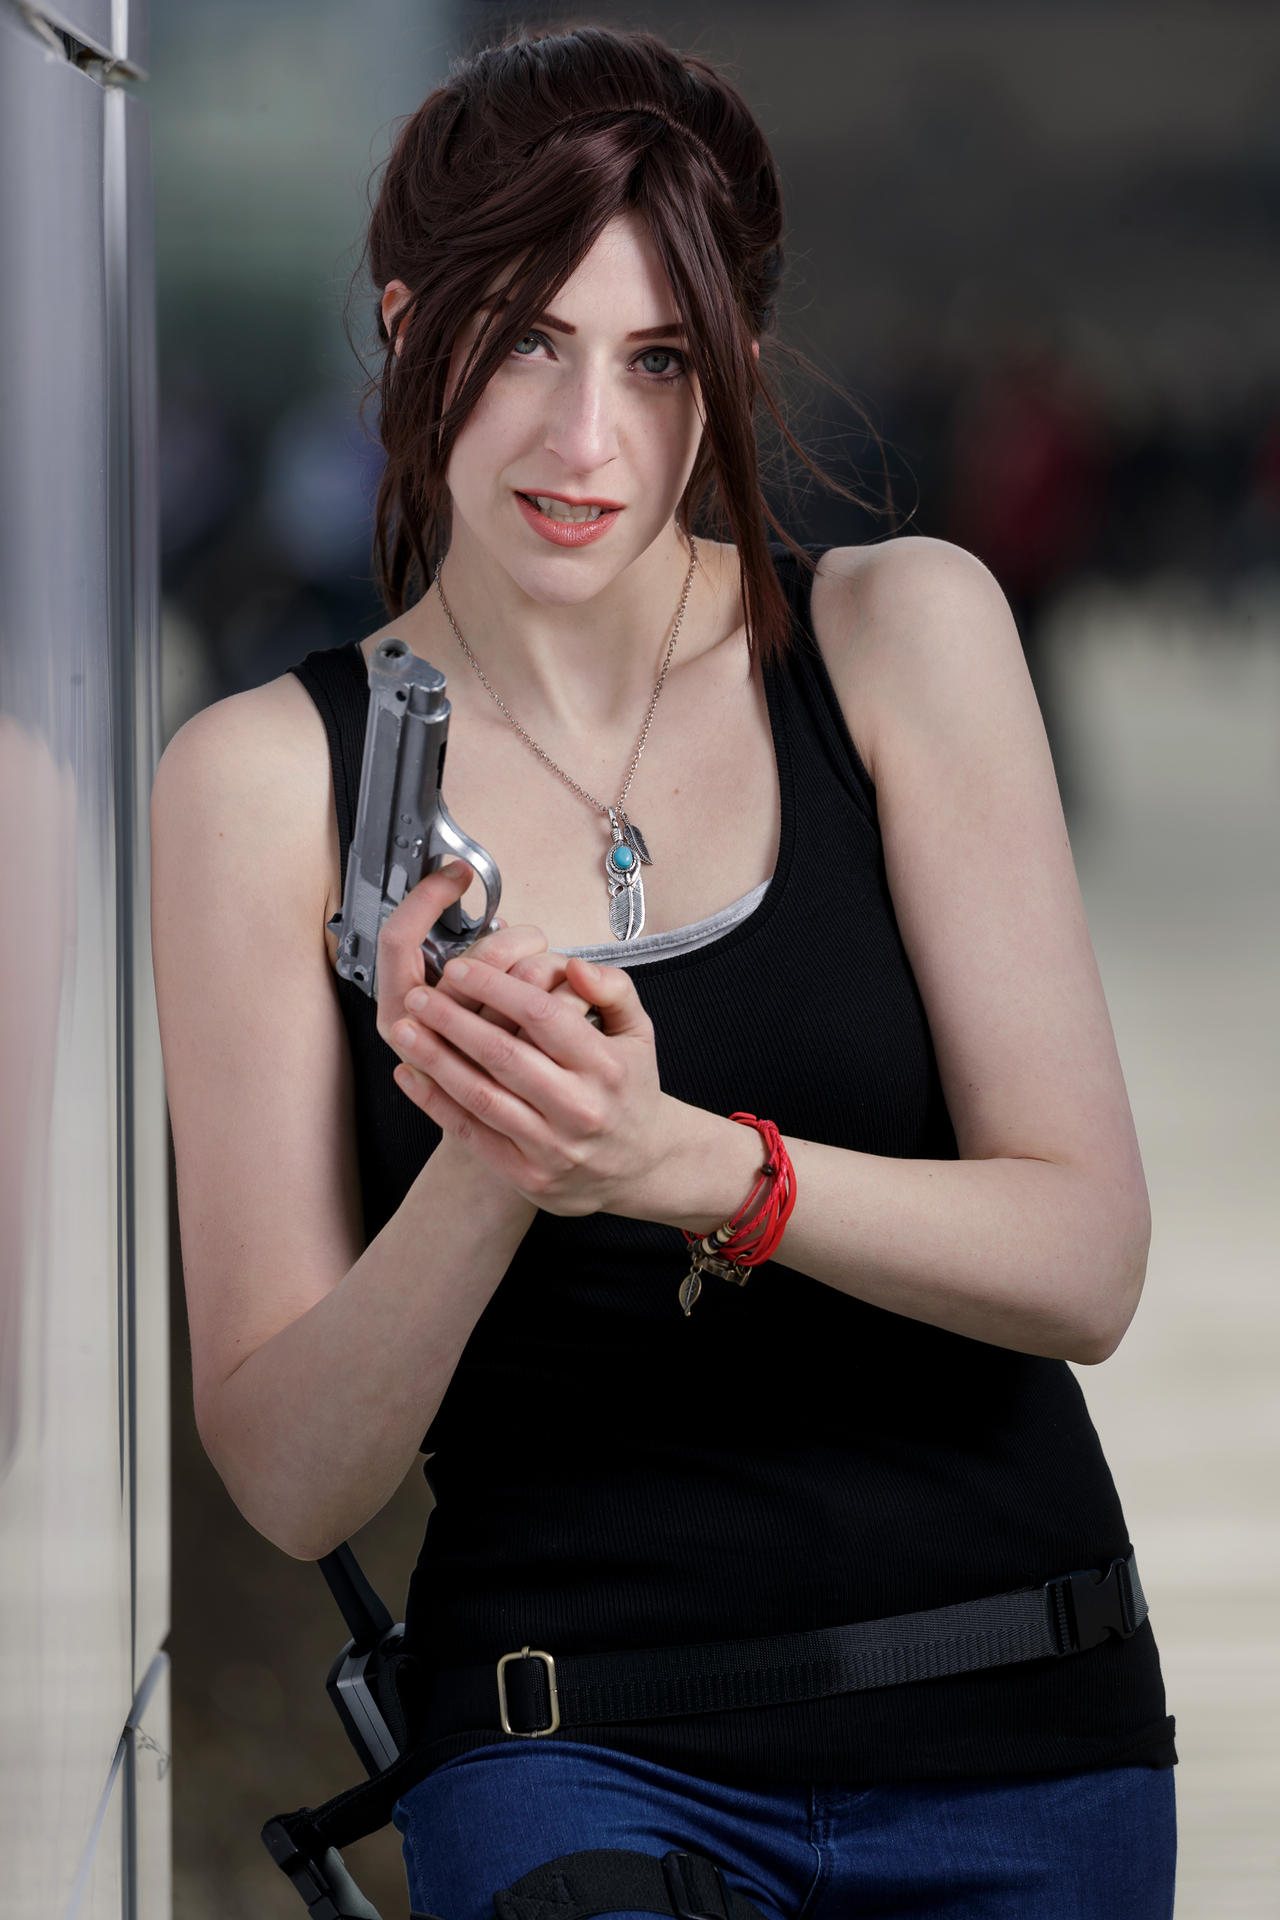 Claire Redfield - Resident Evil 2 Remake by Narga-Lifestream on DeviantArt